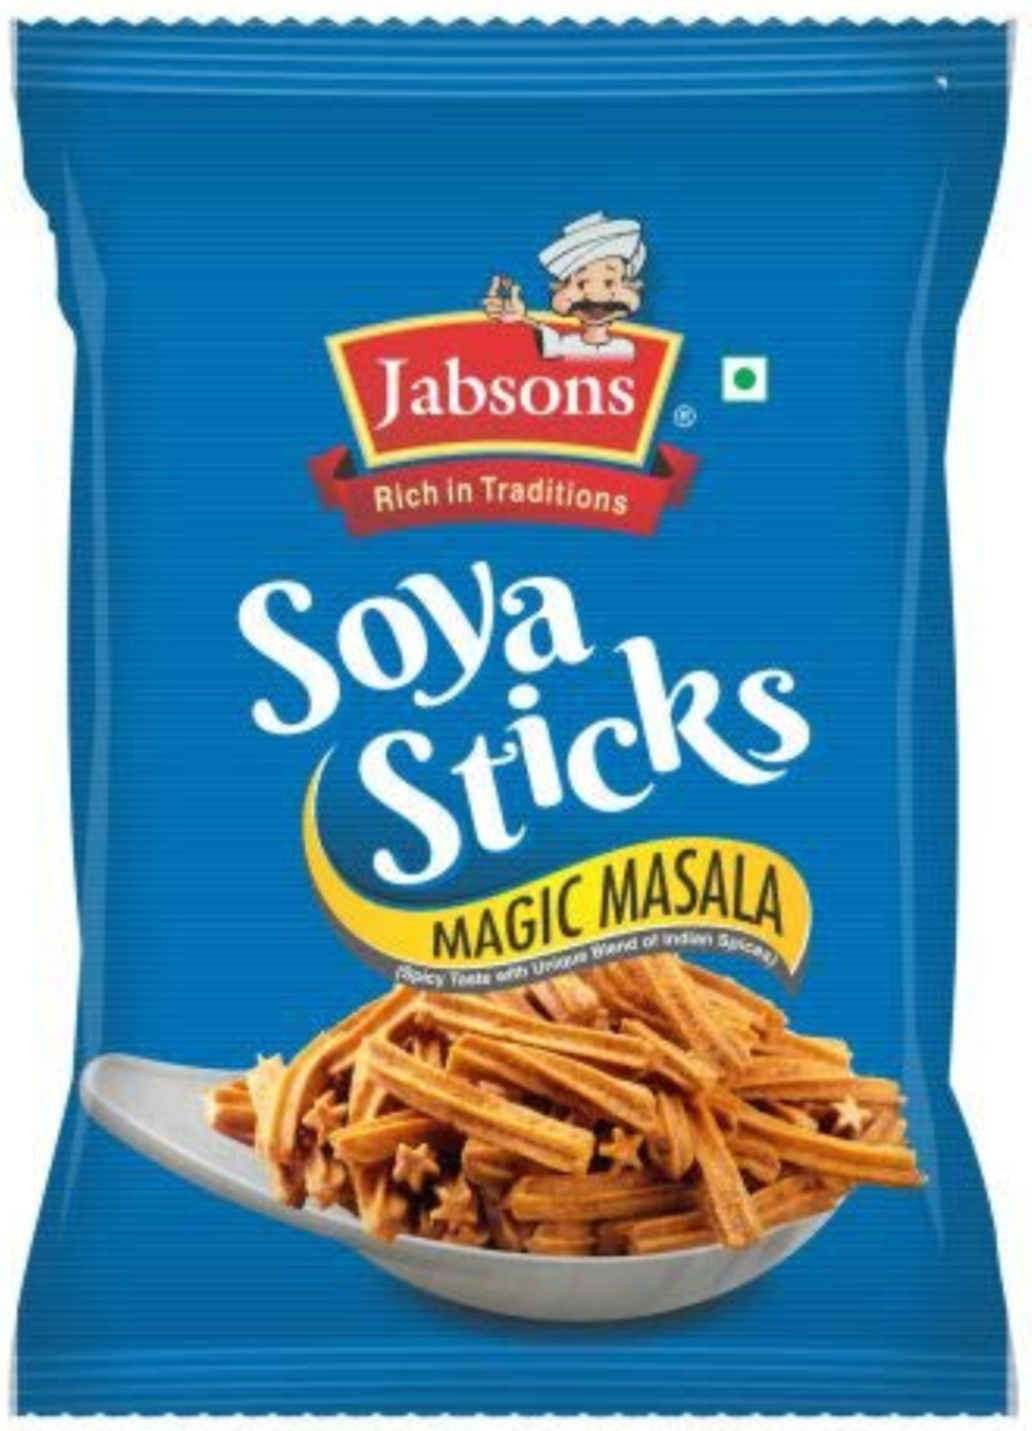 Jabsons - Soya Sticks Magic Masala 180g (Case of 24)